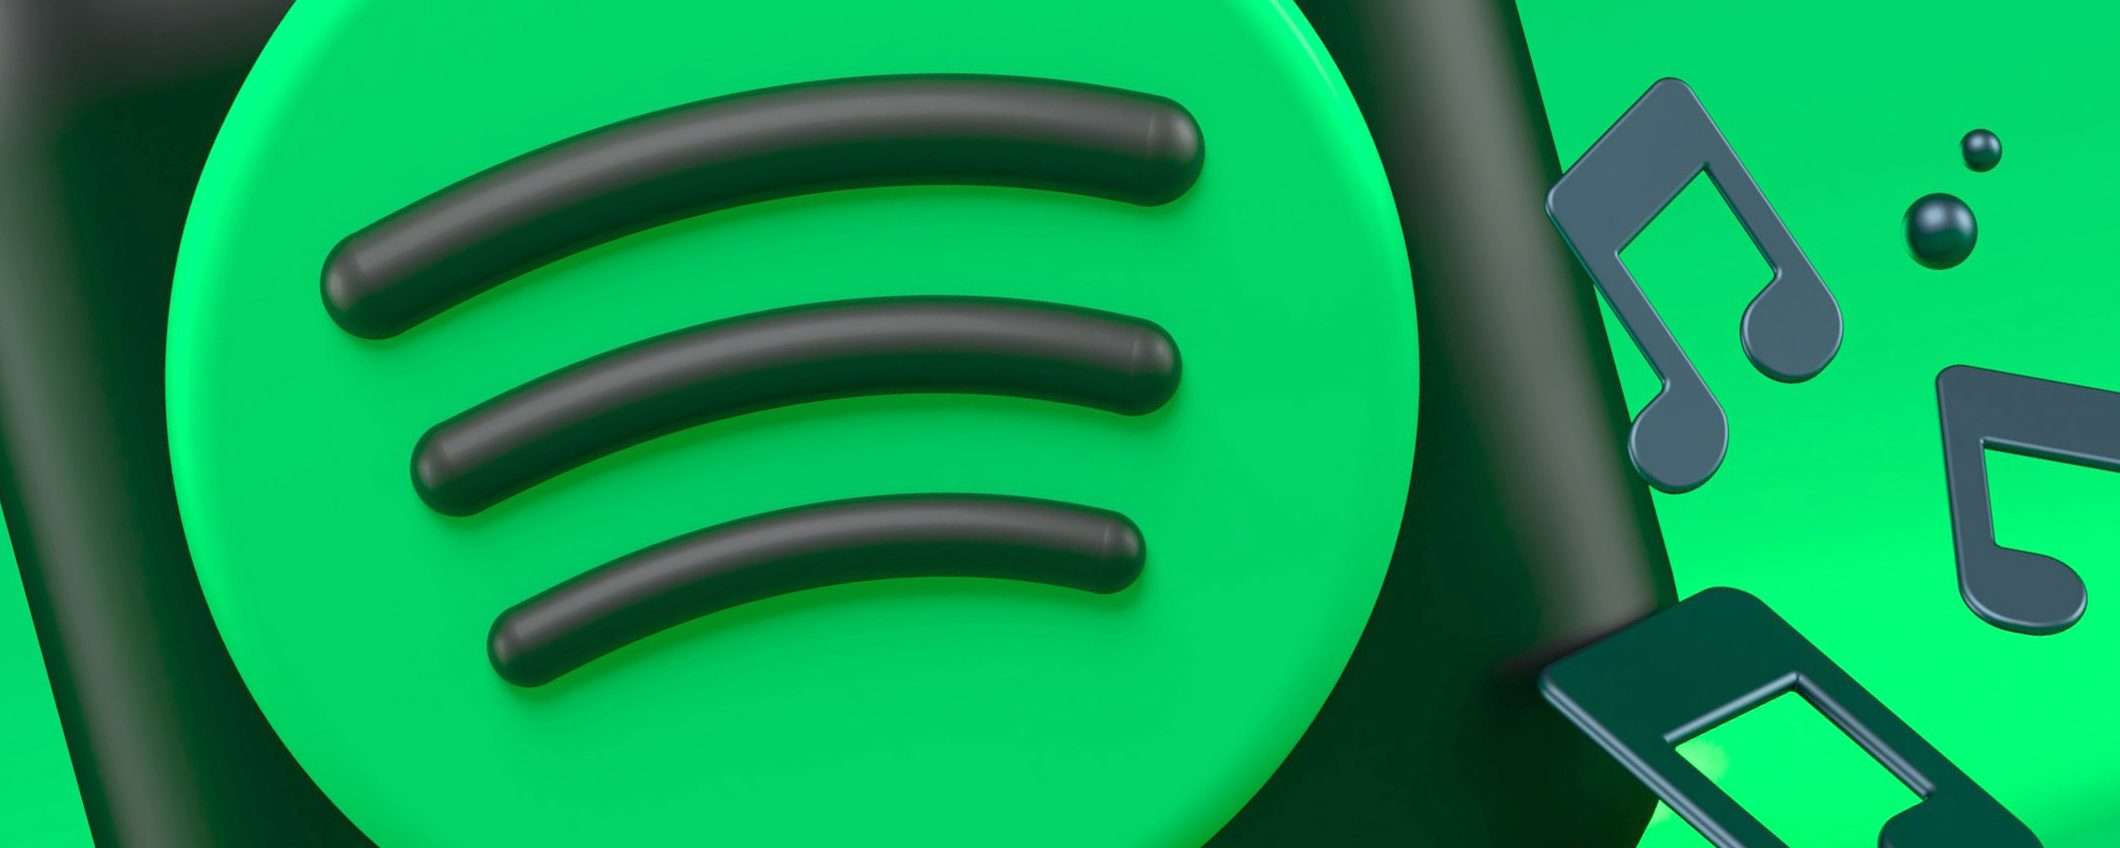 Spotify potrebbe aggiungere i video musicali